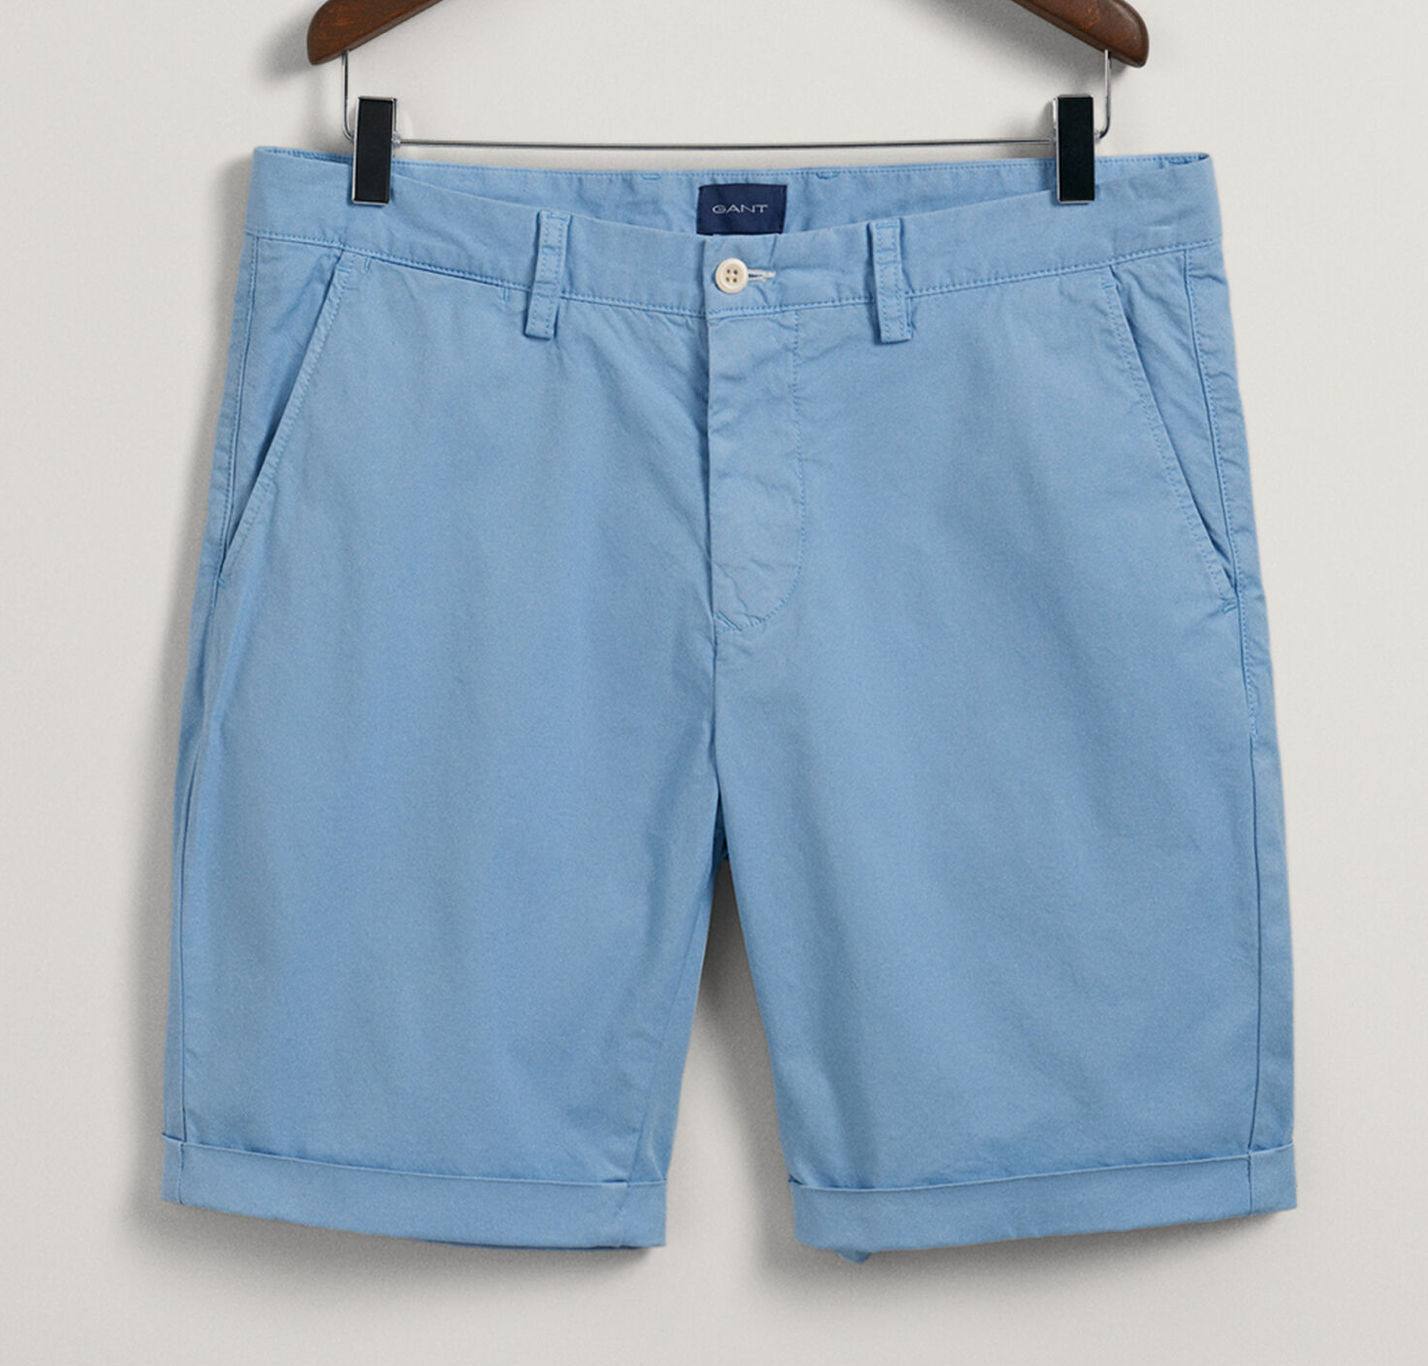 Gant "Allister" Sunfaded Chino Shorts Gentle Blue